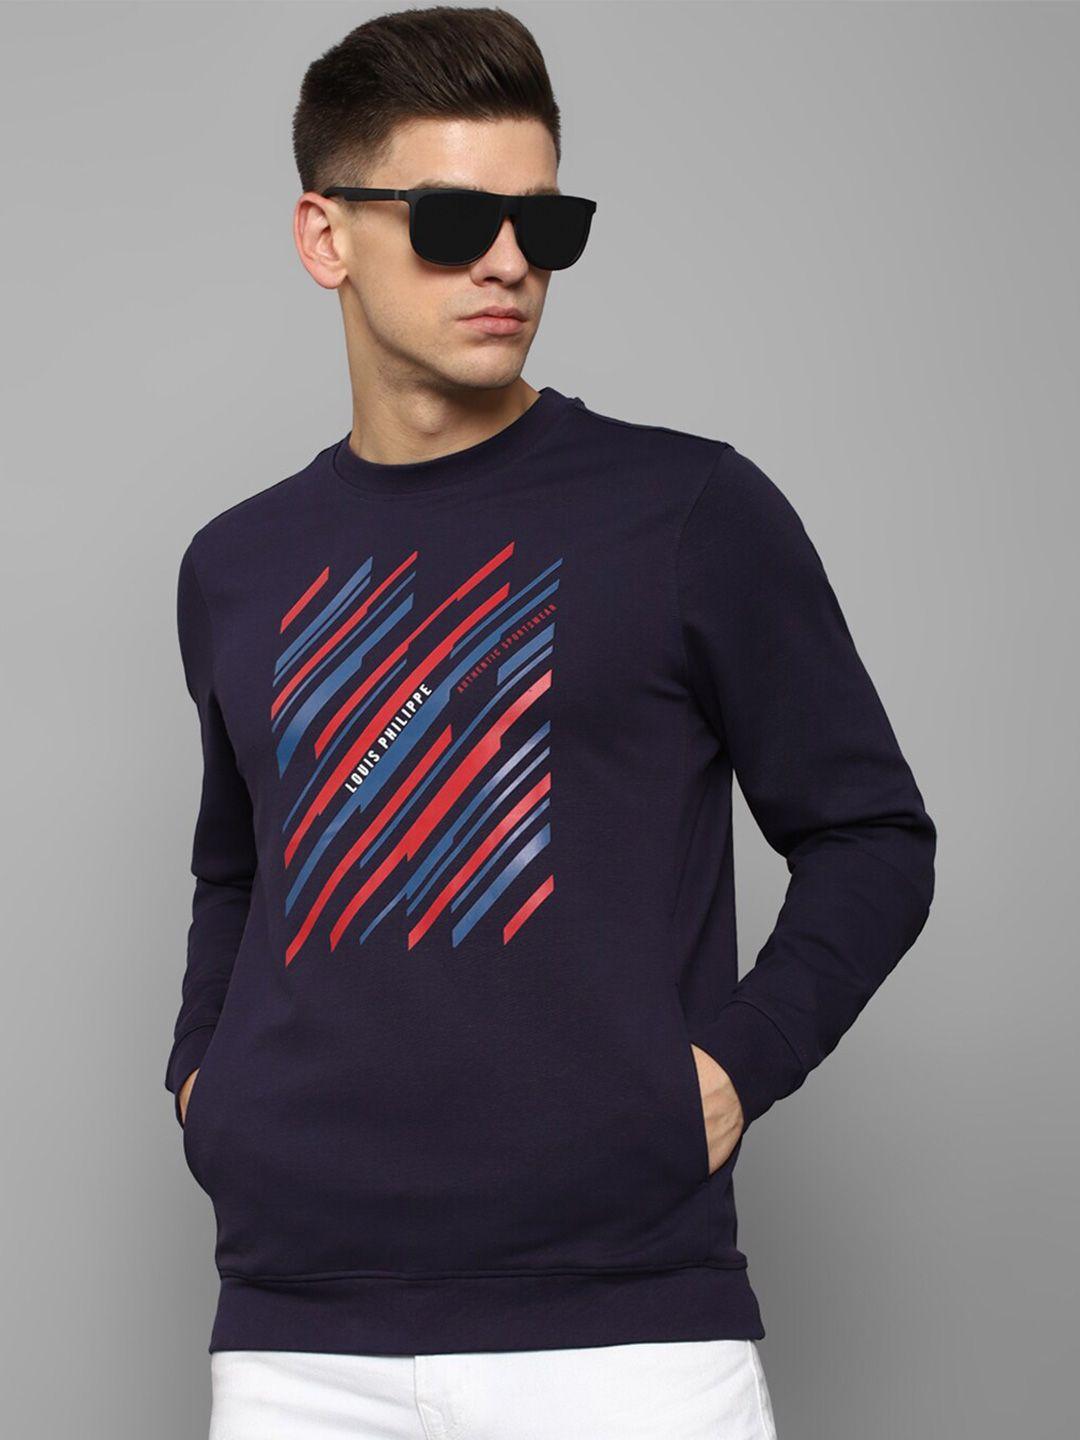 louis-philippe-sport-men-navy-&-red-printed-cotton-sweatshirt